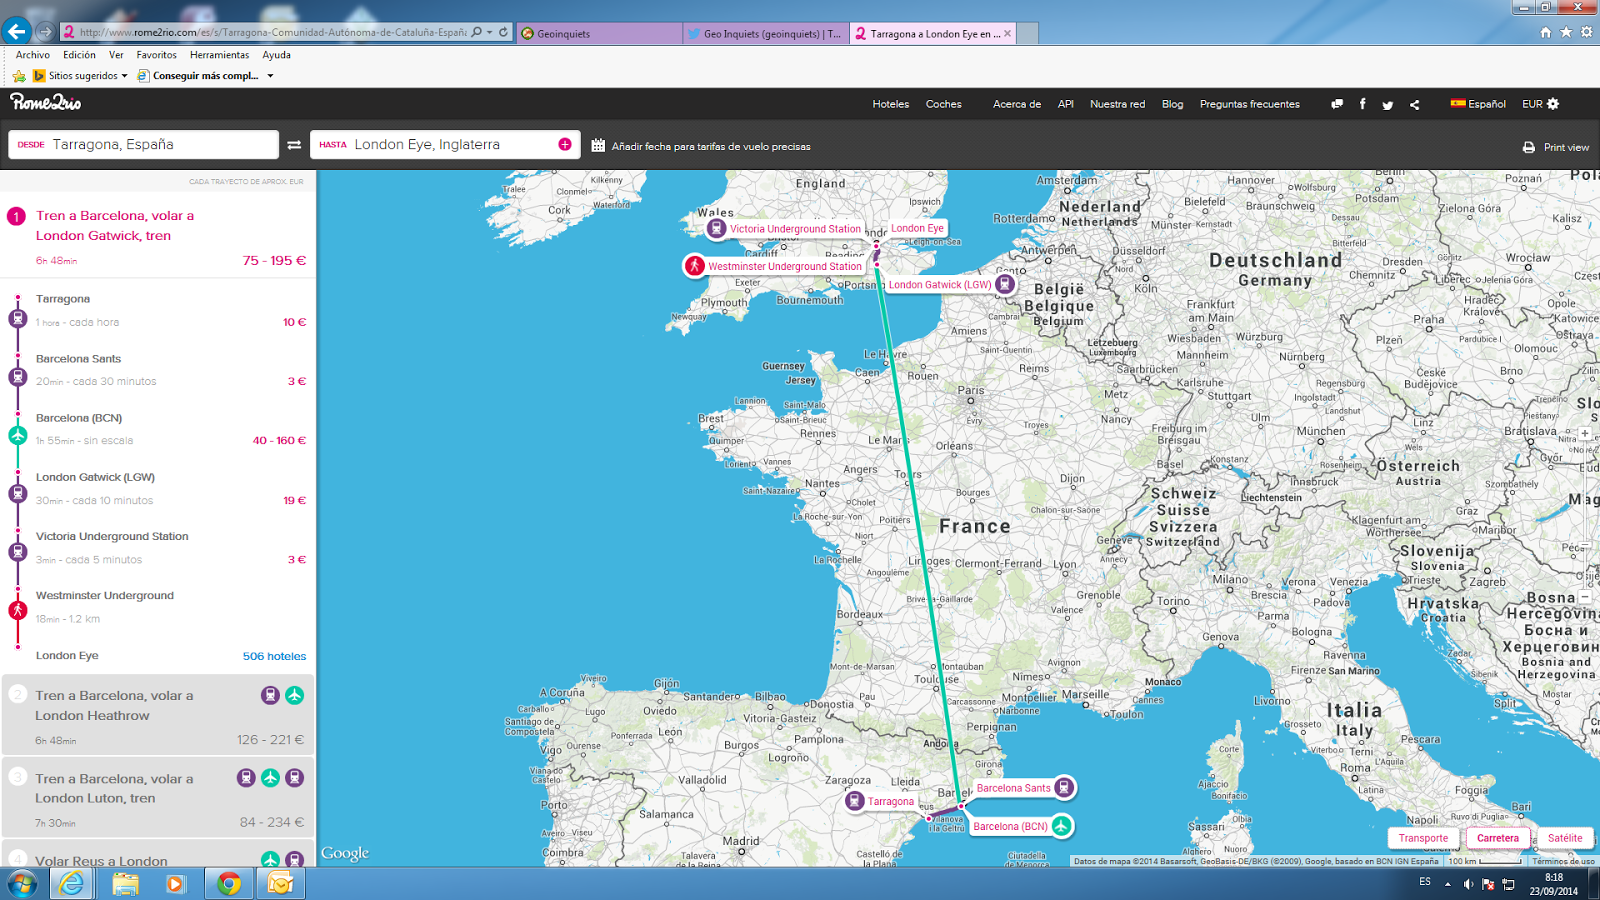 Mapa del dia: Rom2rio o com anar desde Tarragona al London eye, multimodal